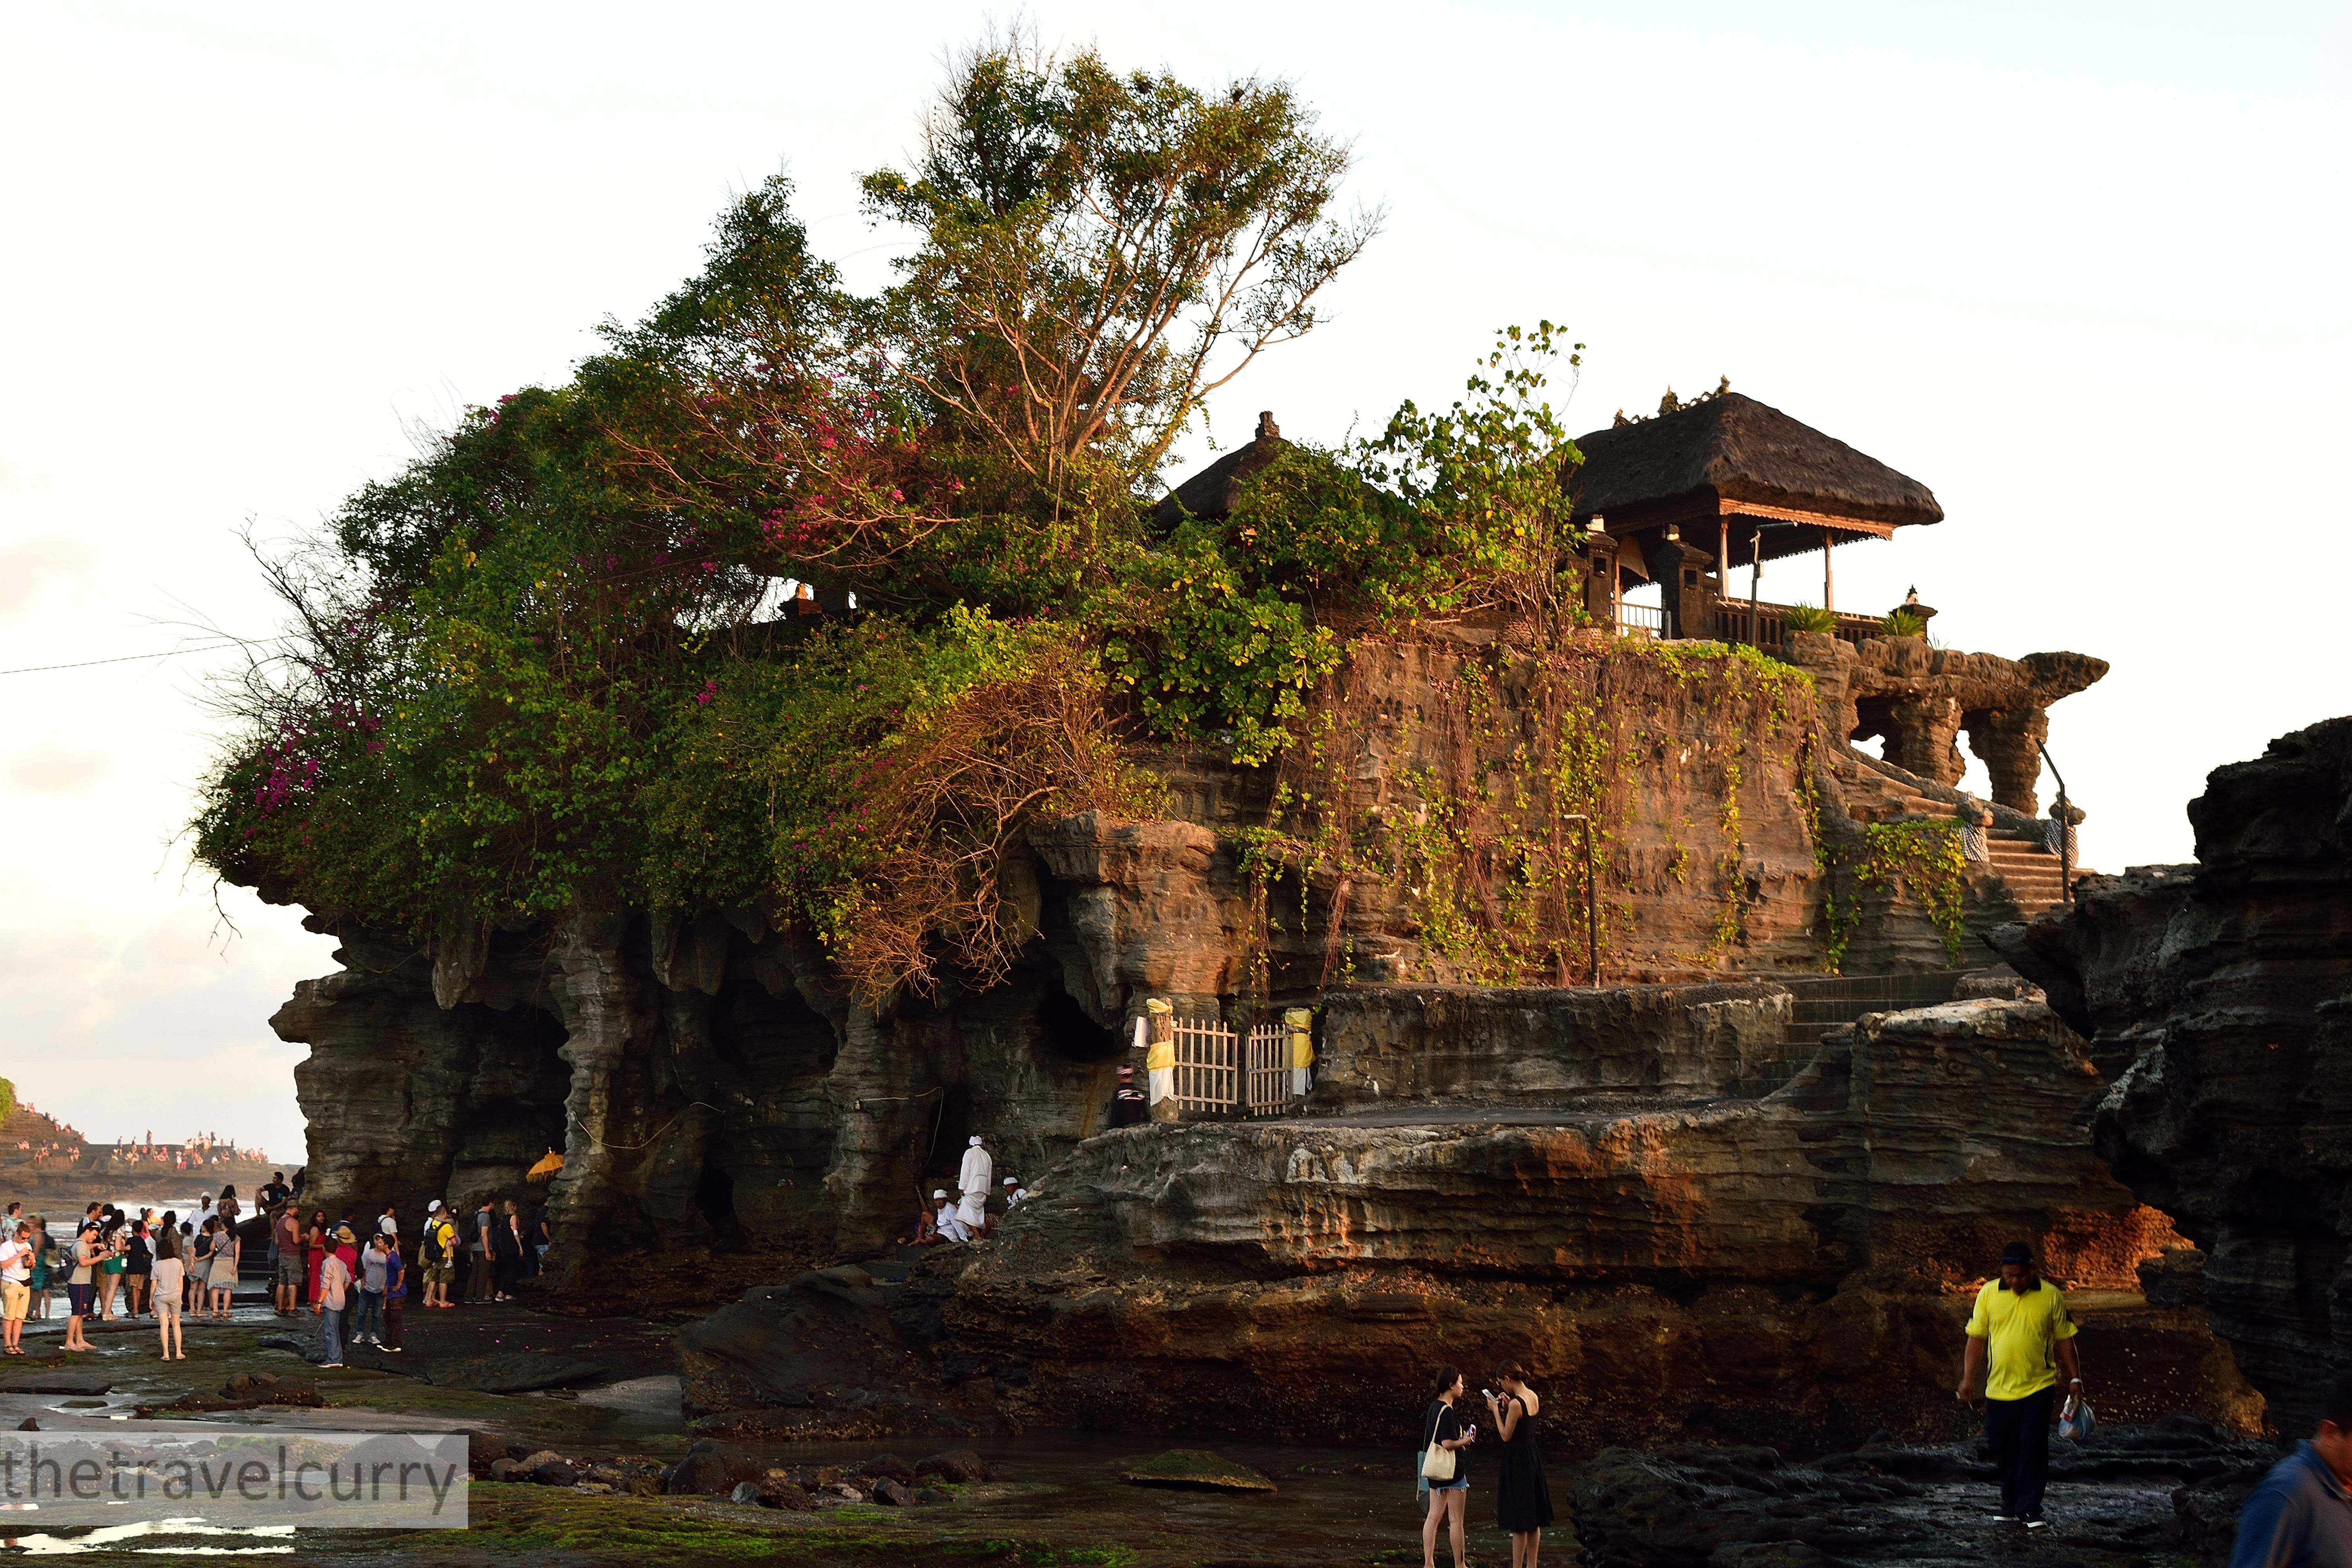 Bali's most photogenic Tanah Lot temple